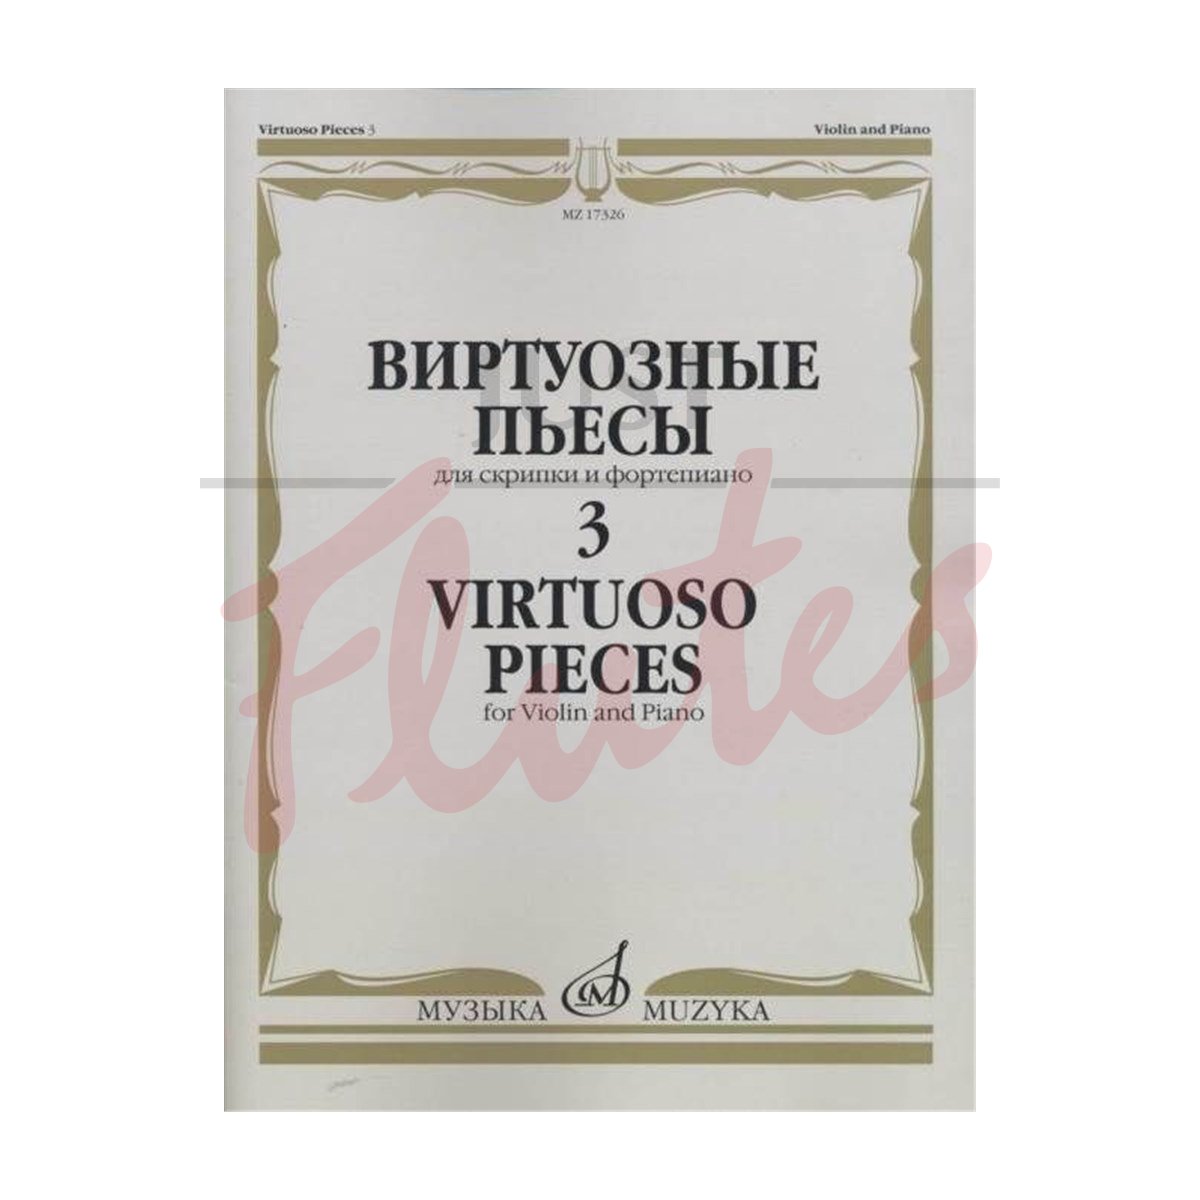 Virtuoso Pieces for Violin and Piano, Volume 3